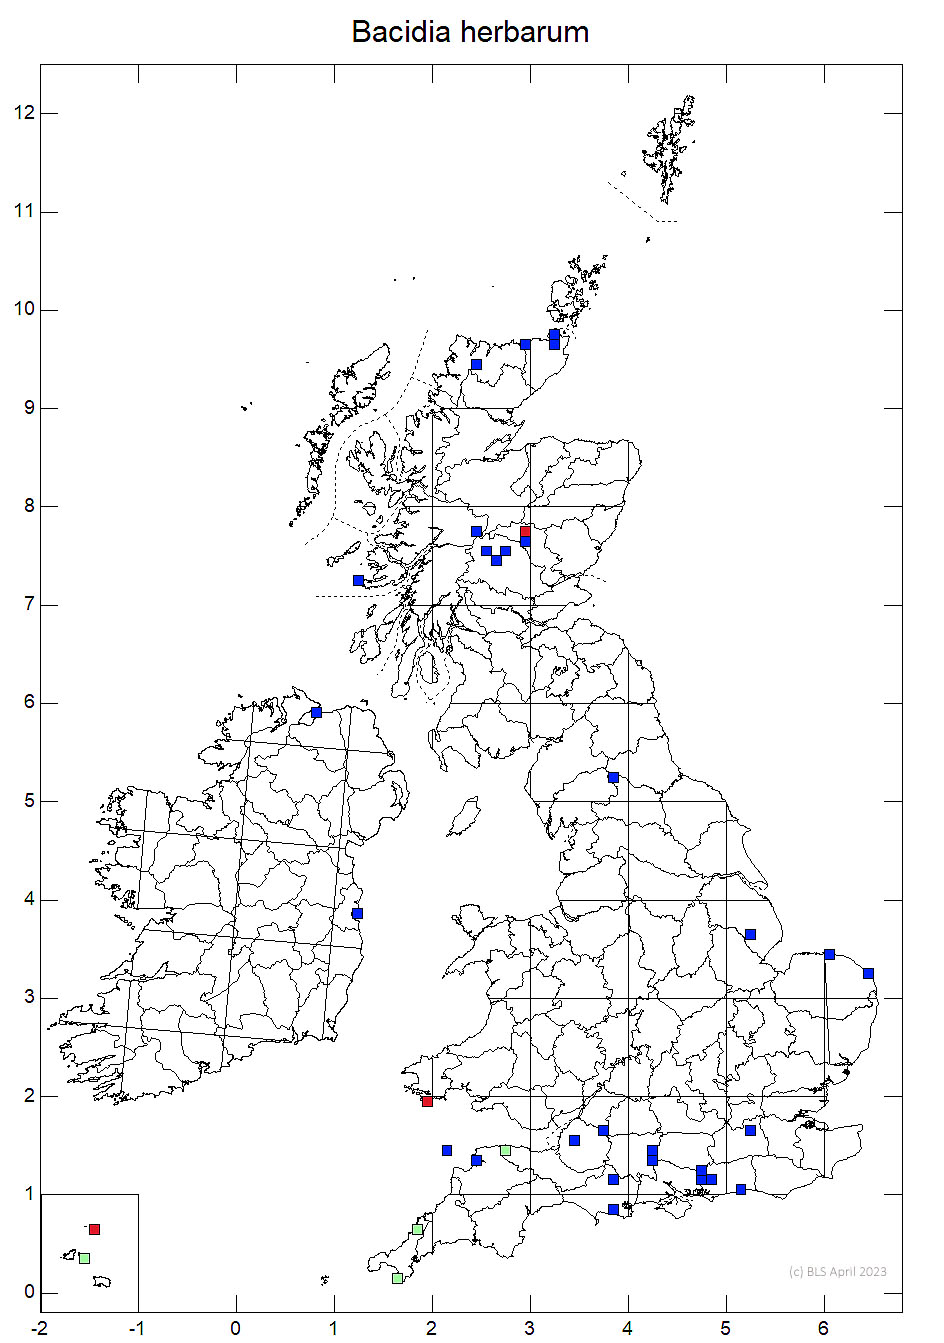 Bacidia herbarum 10km sq distribution map